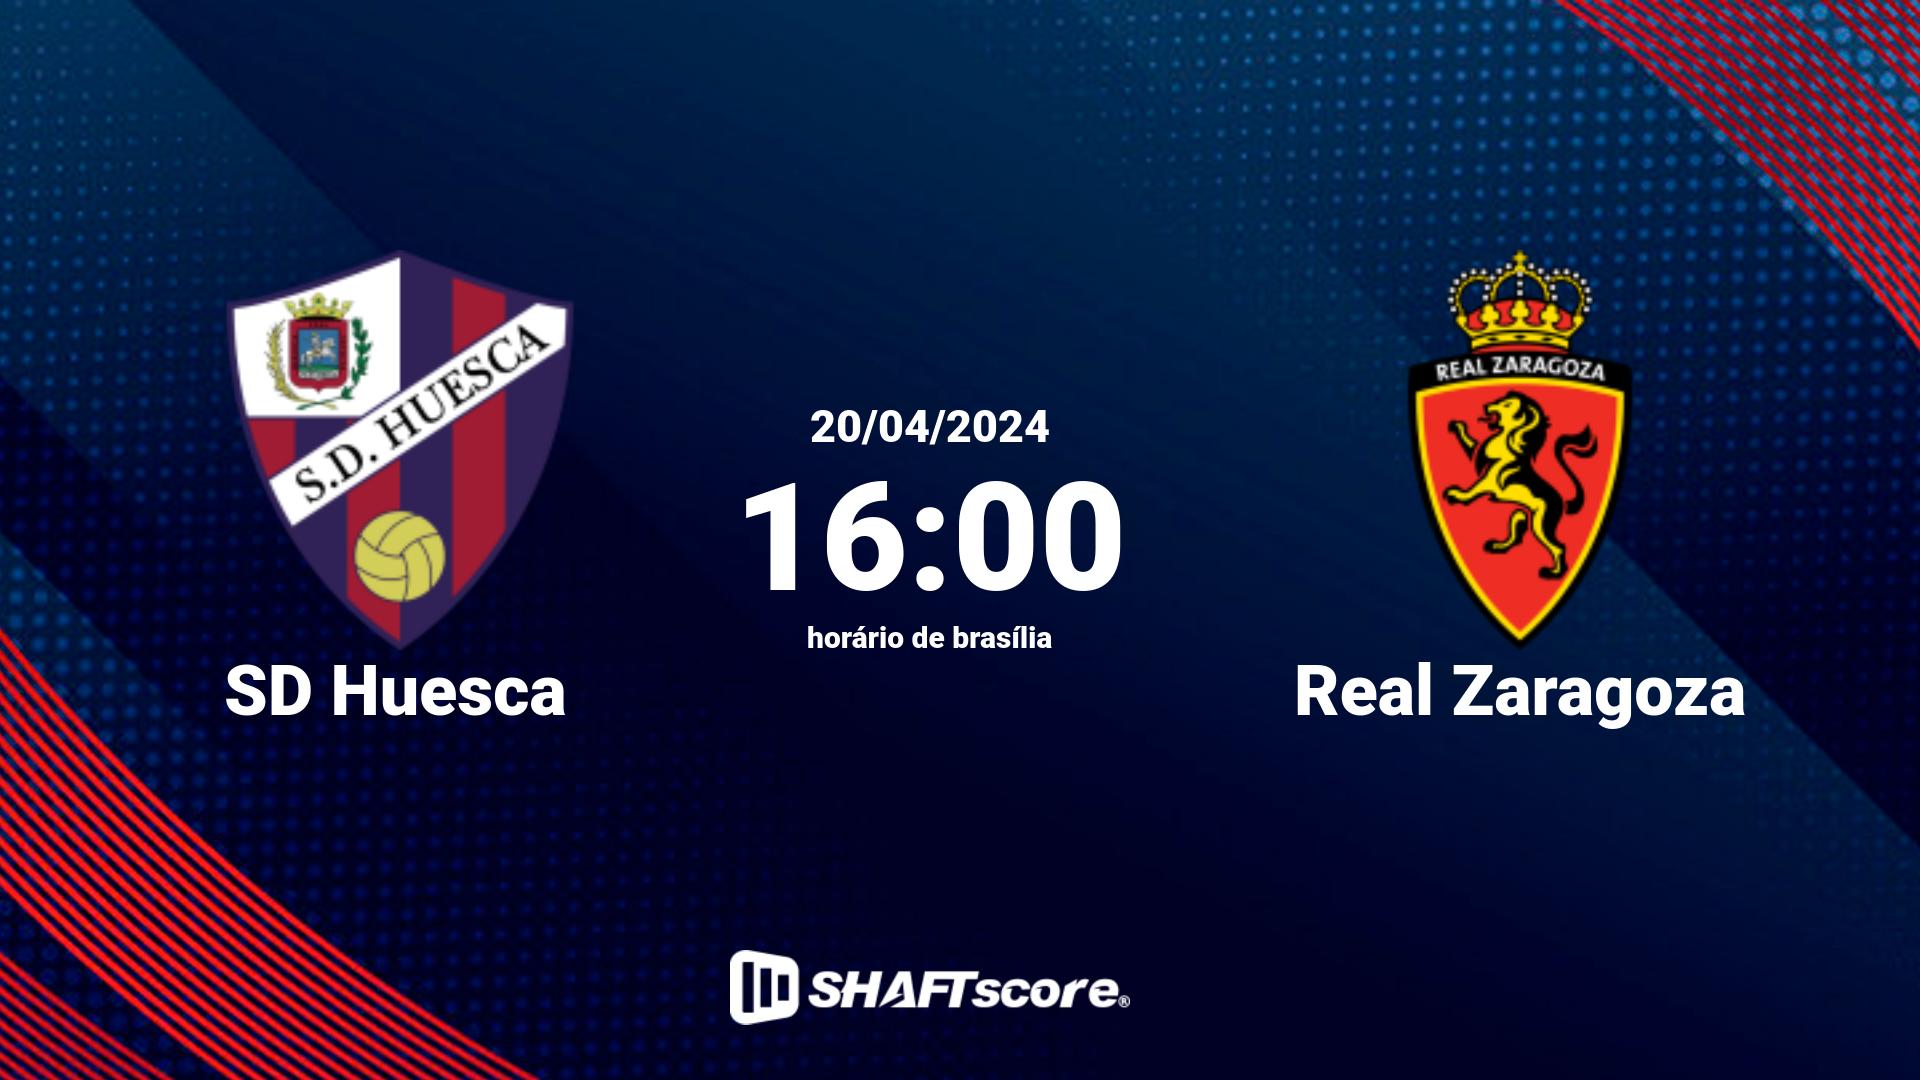 Estatísticas do jogo SD Huesca vs Real Zaragoza 20.04 16:00